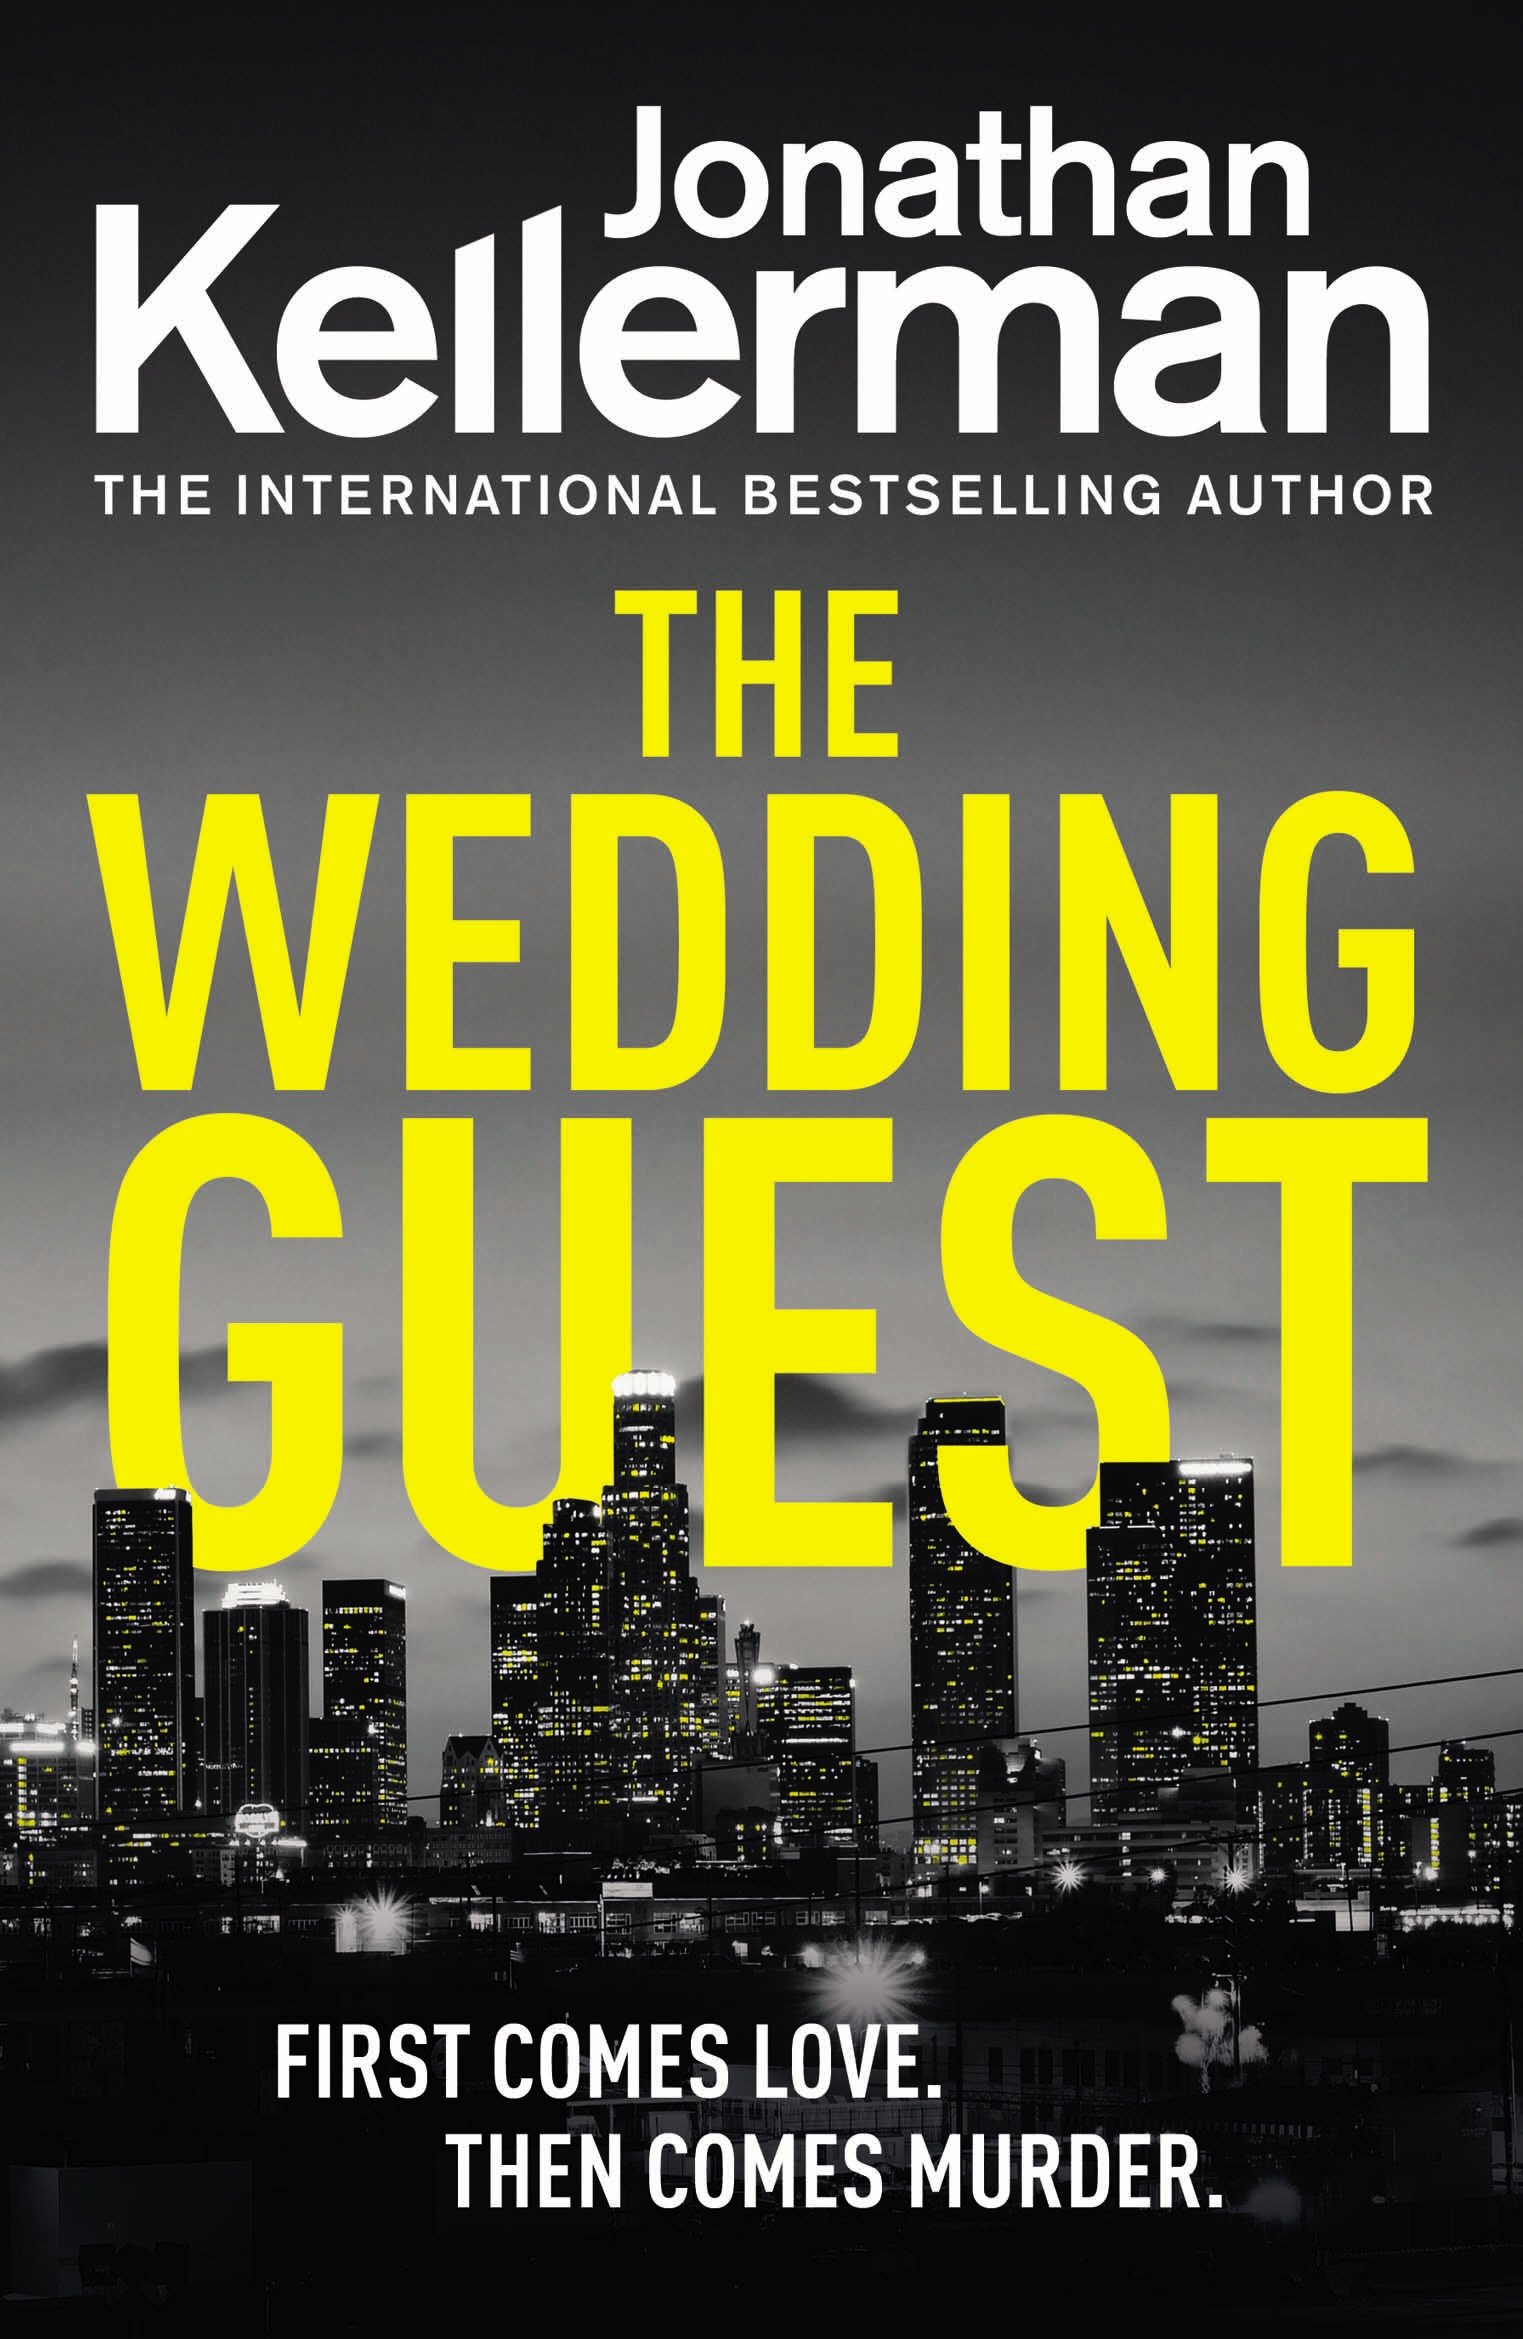 Book “The Wedding Guest” by Jonathan Kellerman — November 14, 2019